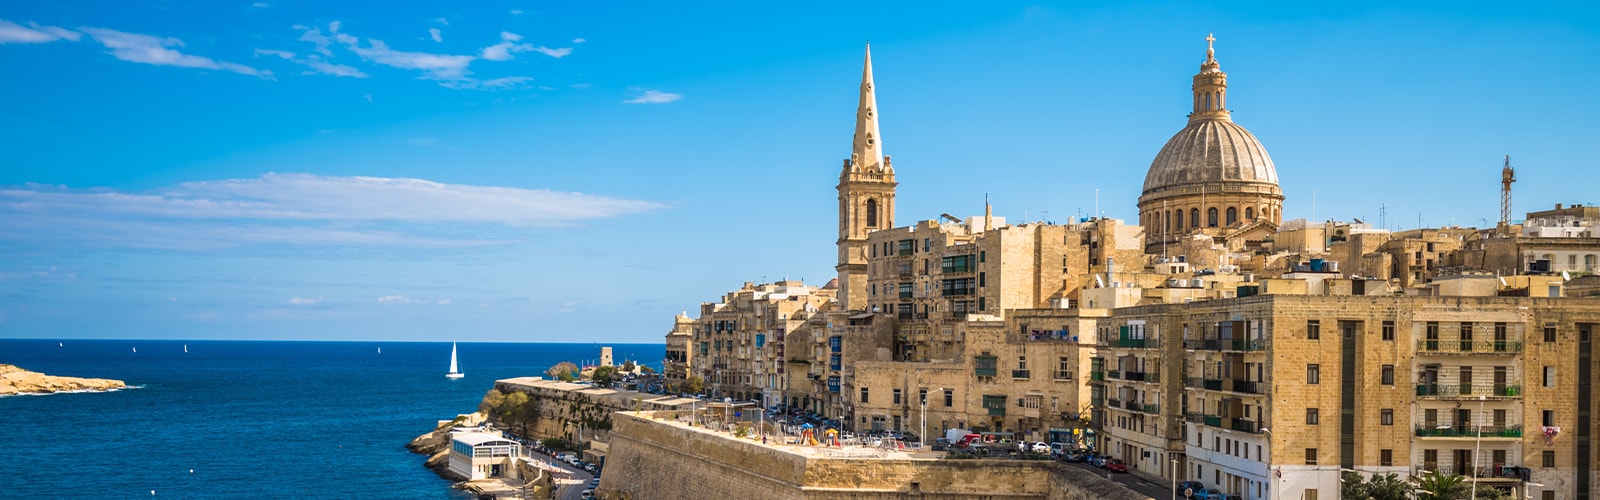 Real estate survey, image of Malta